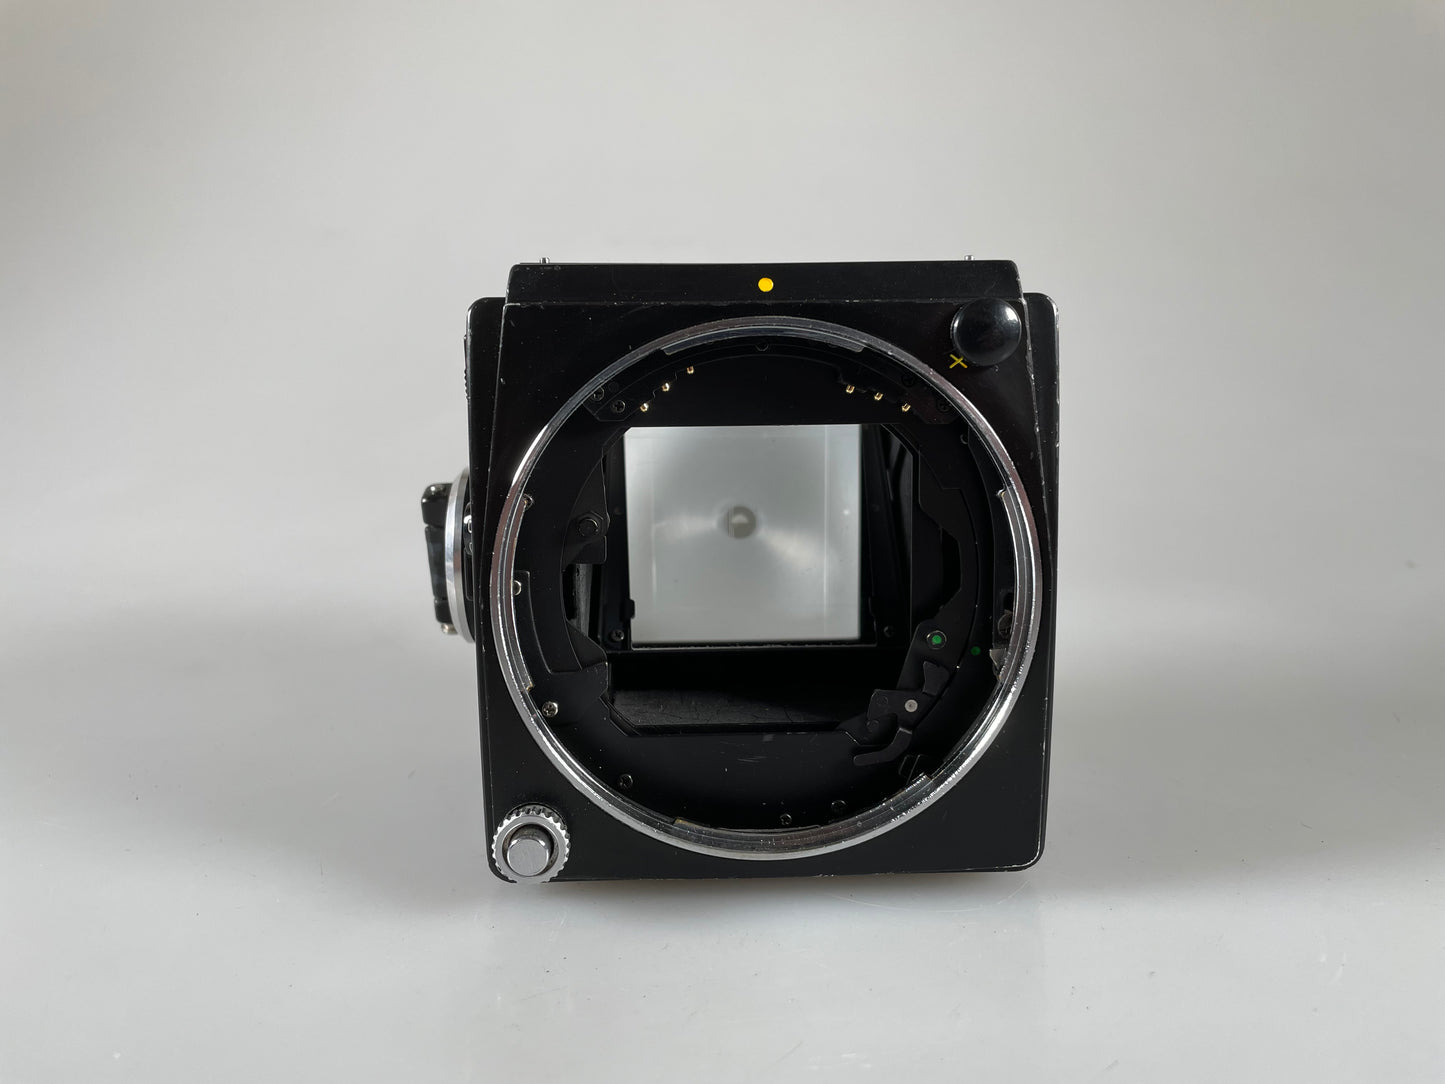 Zenza Bronica SQ-A medium format camera body